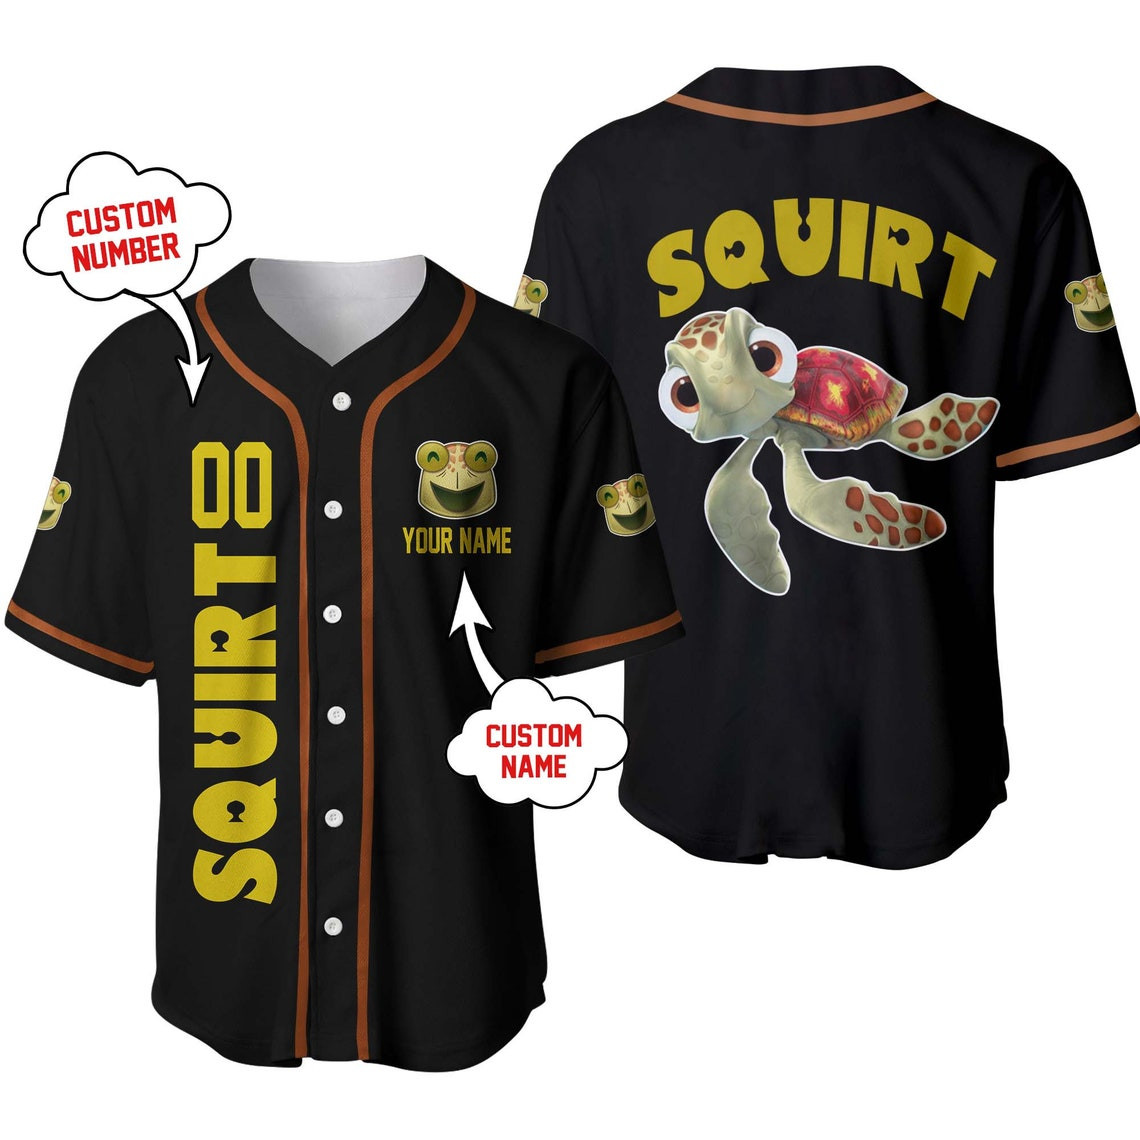 Squirt Turtle Finding Nemo Black Yellow Disney Unisex Cartoon Custom Baseball Jersey Personalized Shirt Men Women